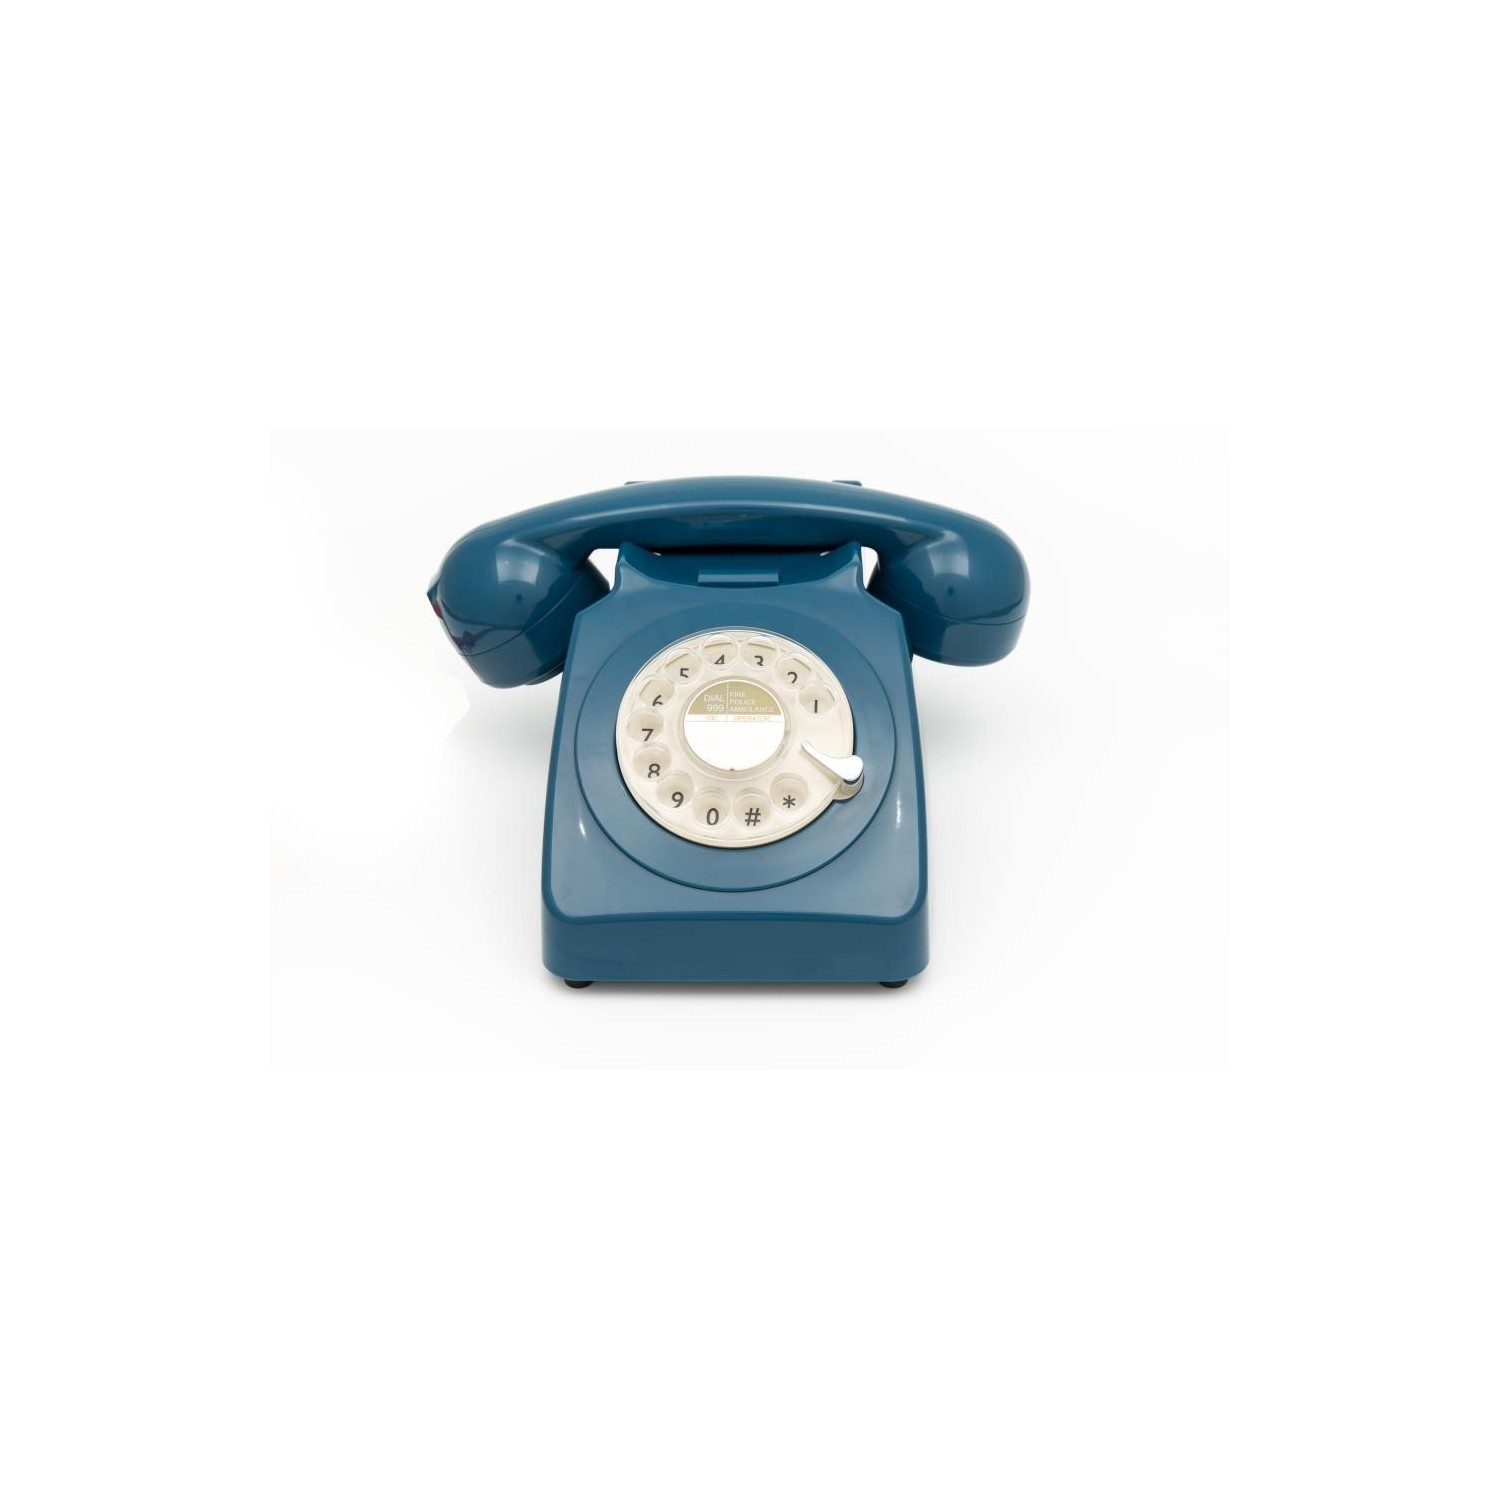 Teléfono Gpo 746 Rotary Azul